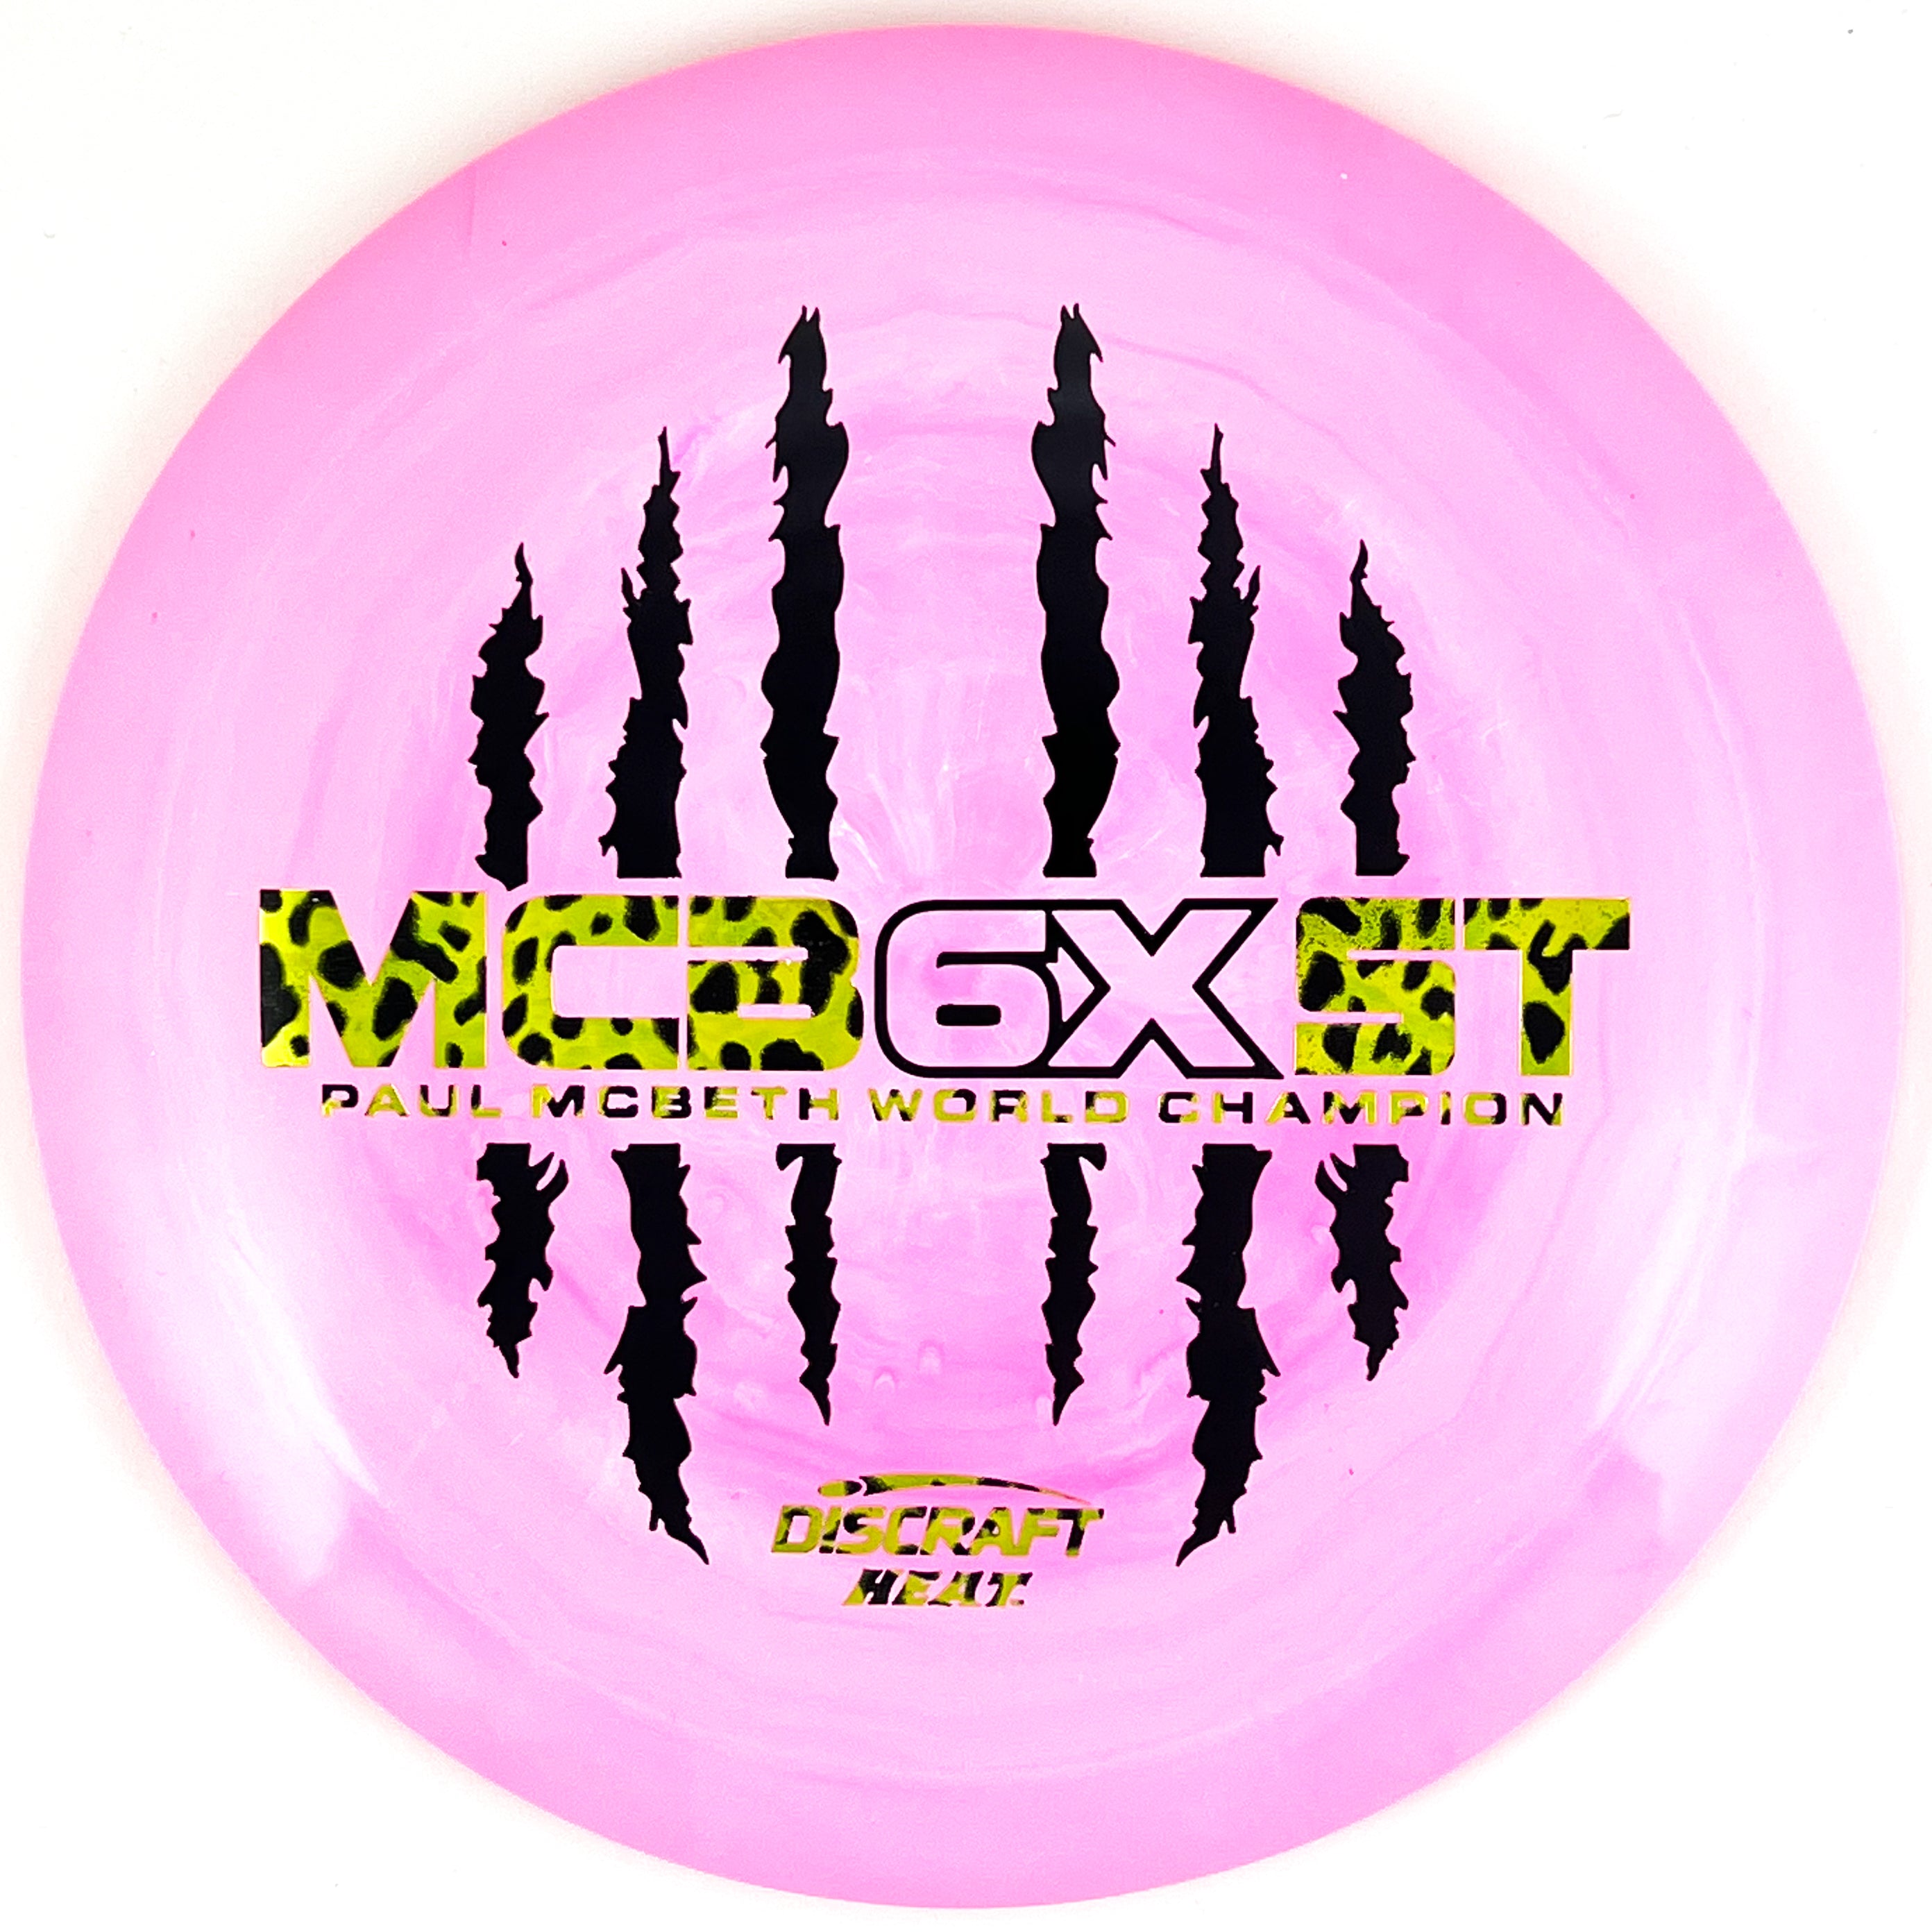 Paul McBeth 6X Claw Commemorative Heat